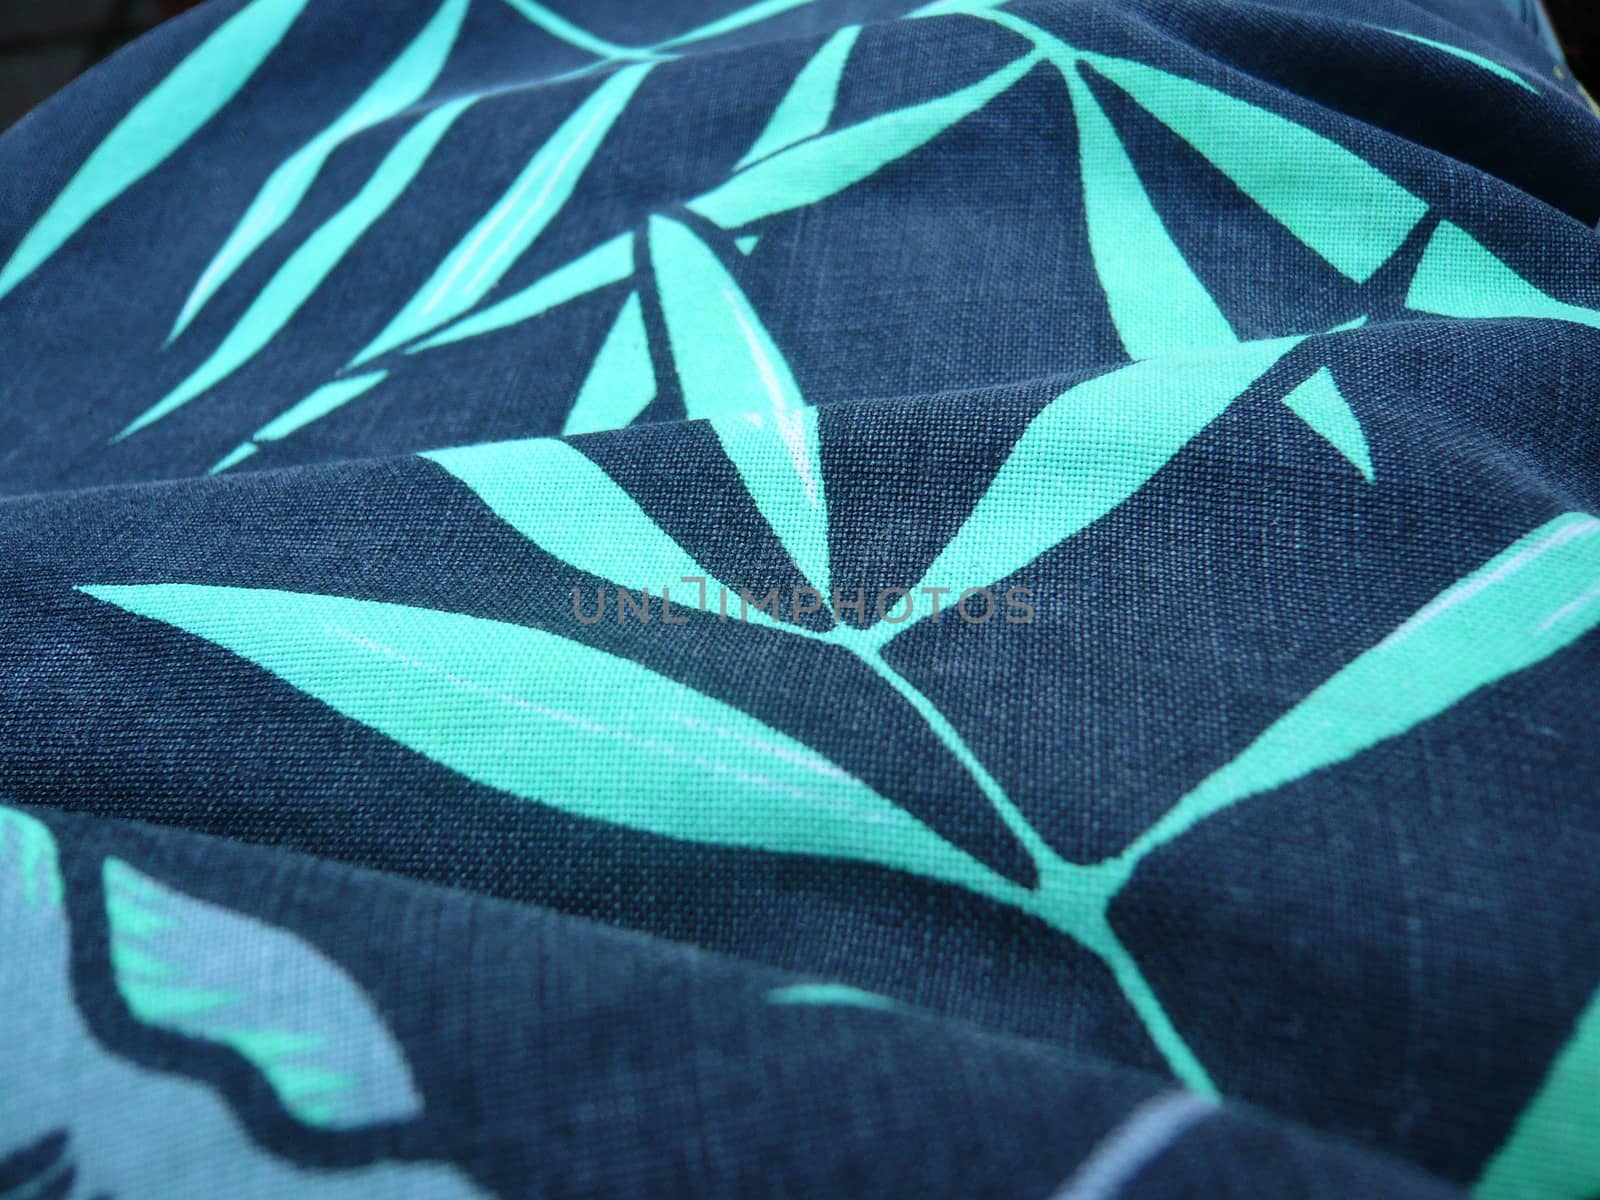 Close up of a textile